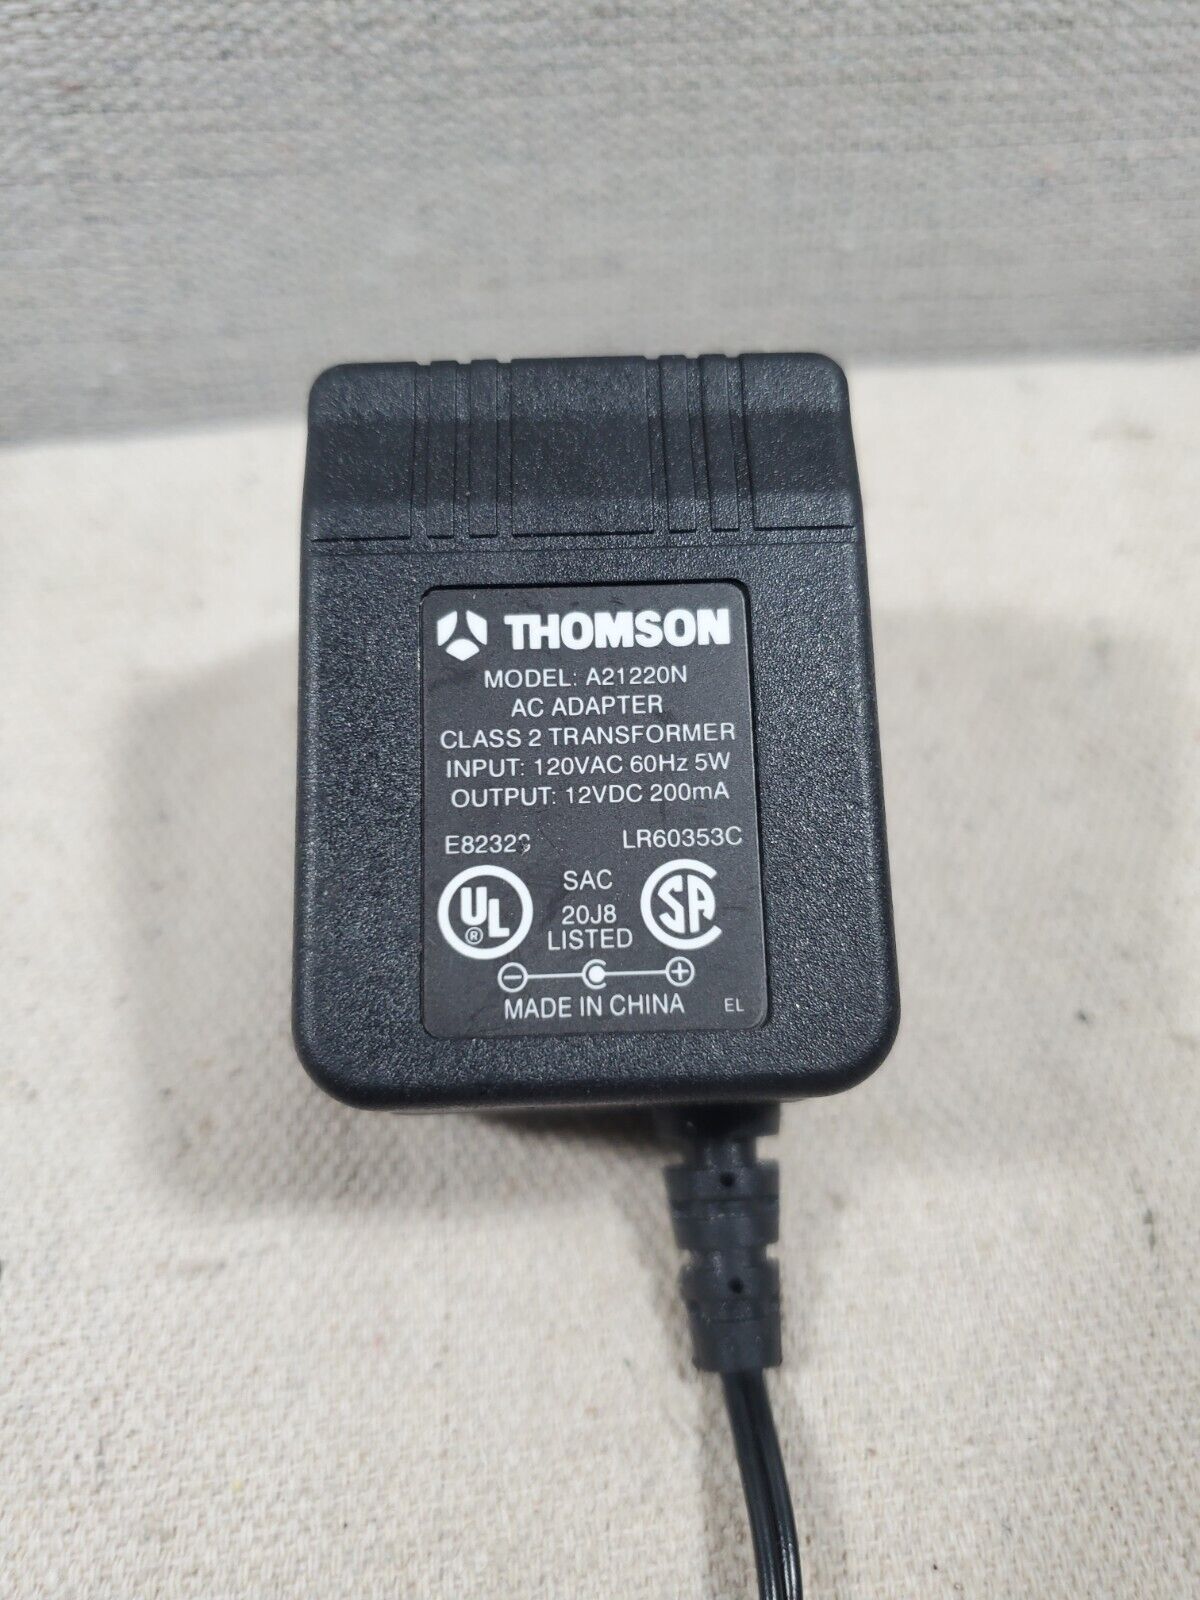 *Brand NEW*Thomson 12VDC 12V 200mA AC Adapter A21220N Class 2 Transformer Power Supply